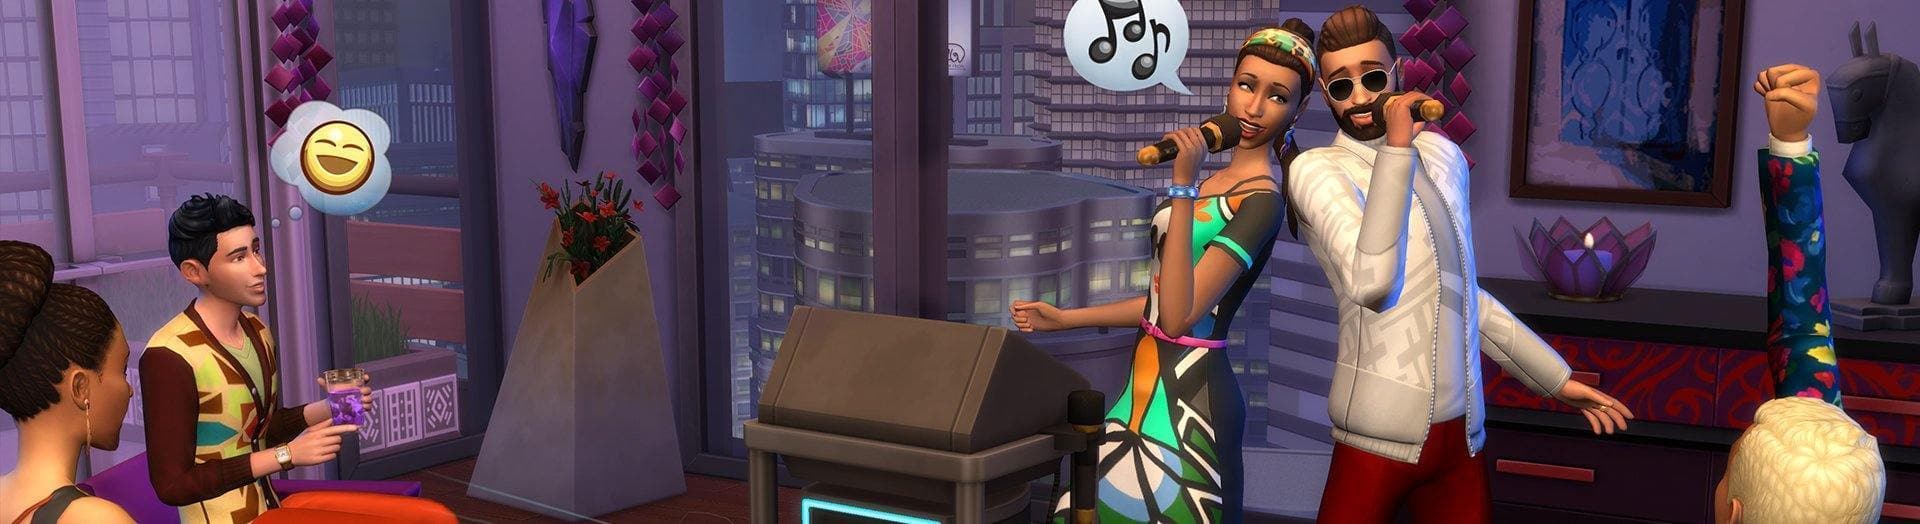 The Sims 4: City Living - למחשב - EXON - גיימינג ותוכנות - משחקים ותוכנות למחשב ולאקס בוקס!